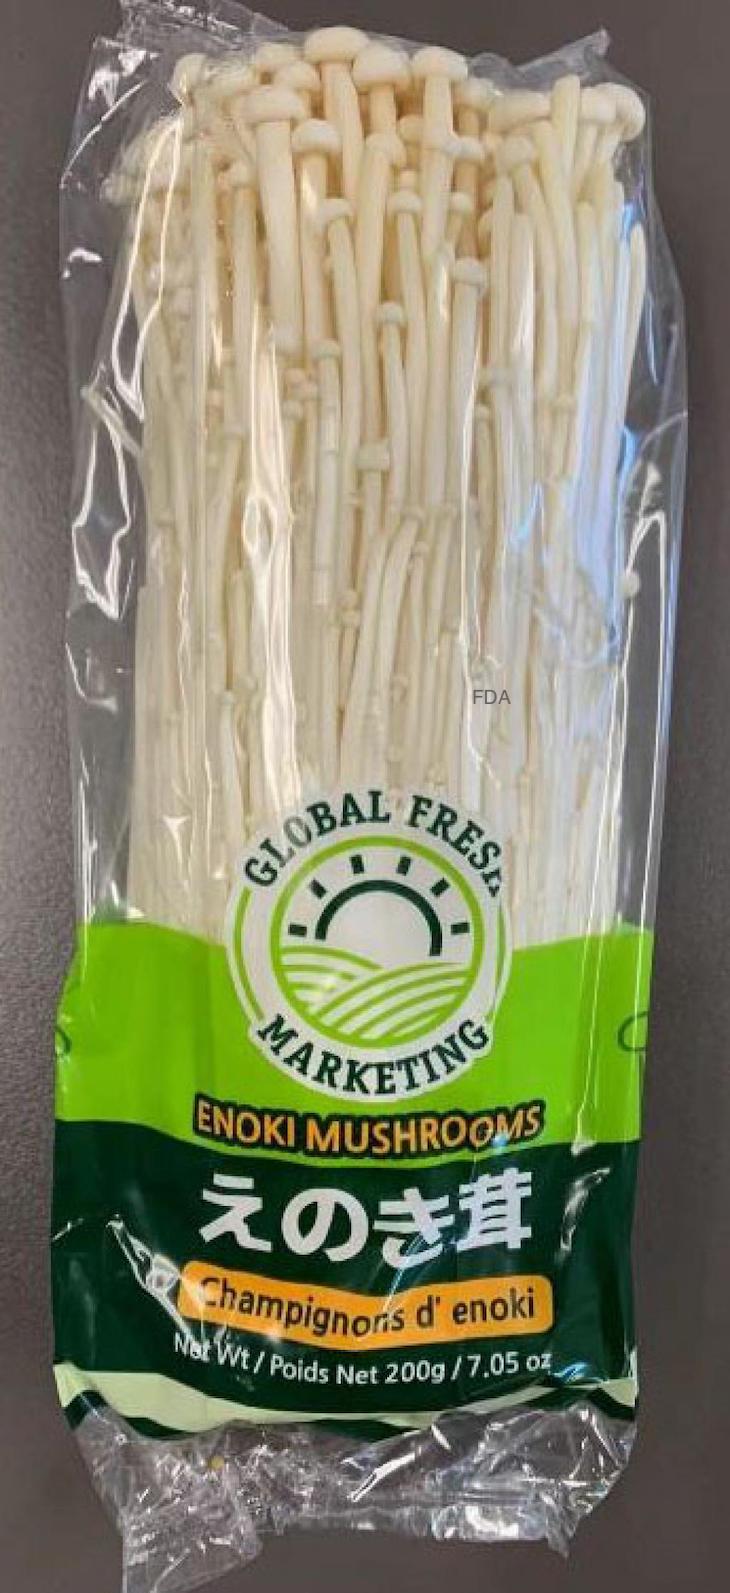 Global Fresh Marketing Enoki Mushrooms Recalled For Listeria